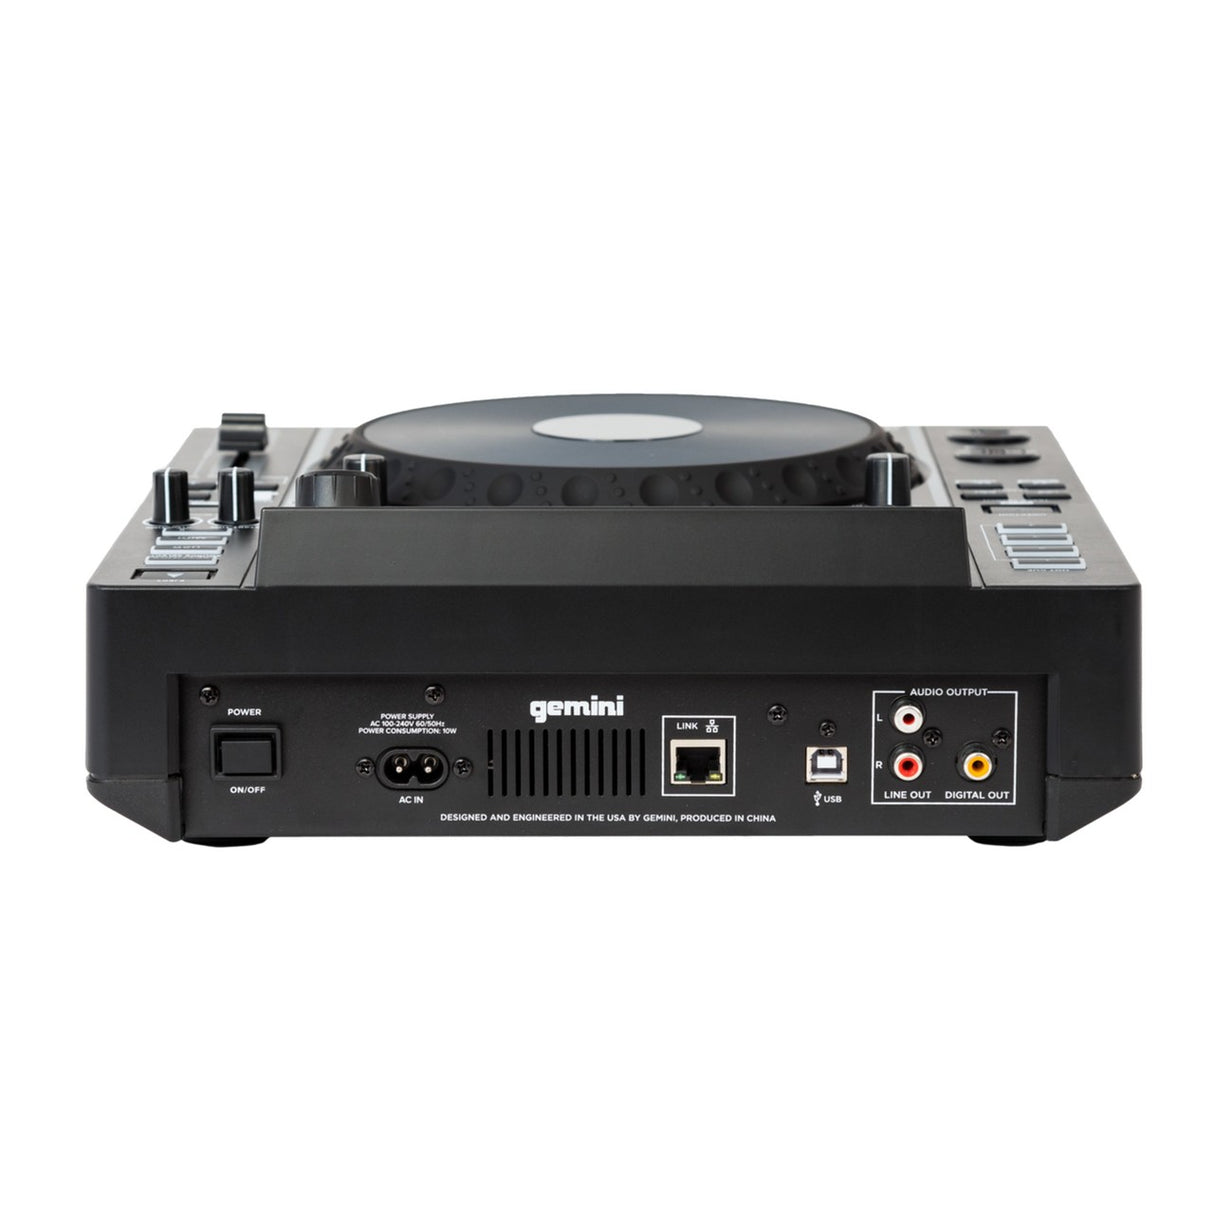 Gemini MDJ-900 CD/USB Media Player and MIDI Controller